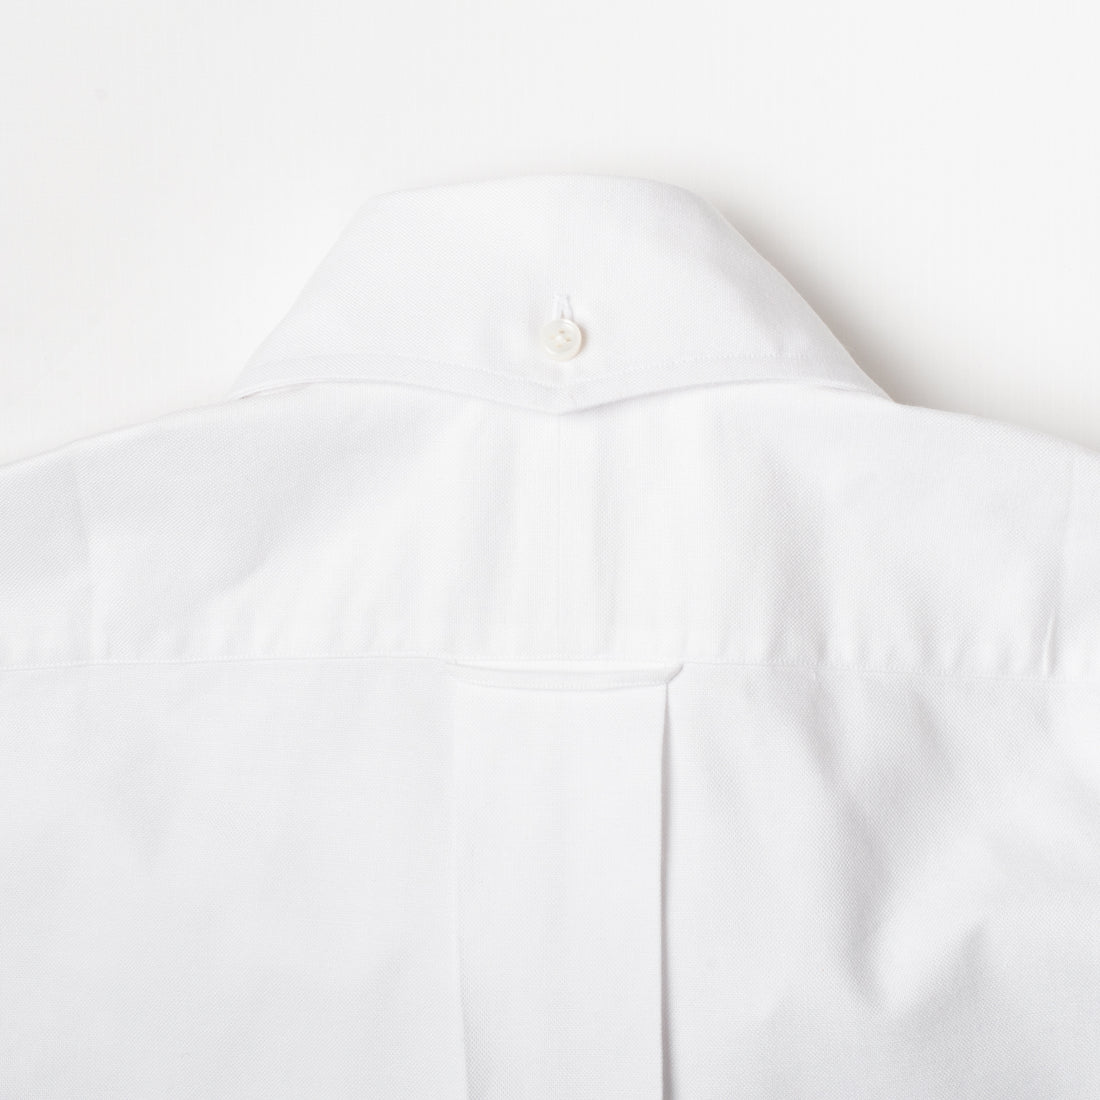 Bryceland's Perfect OCBD Shirt White